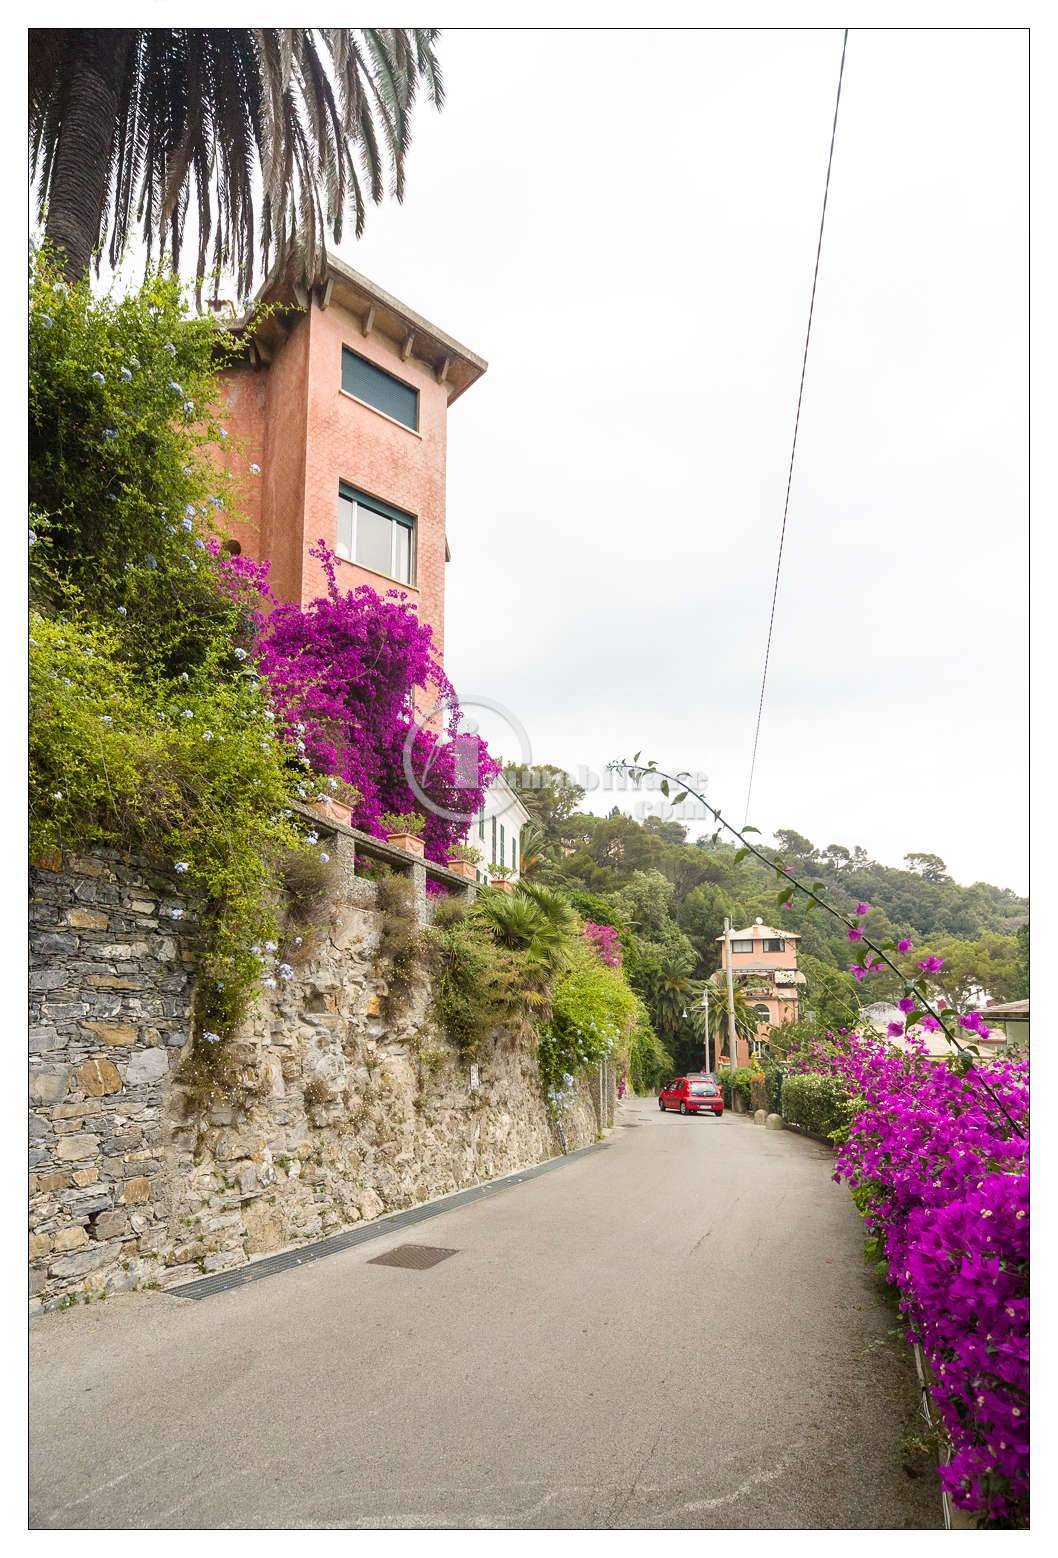 Villa in Vendita a Santa Margherita Ligure: 5 locali, 600 mq - Foto 13